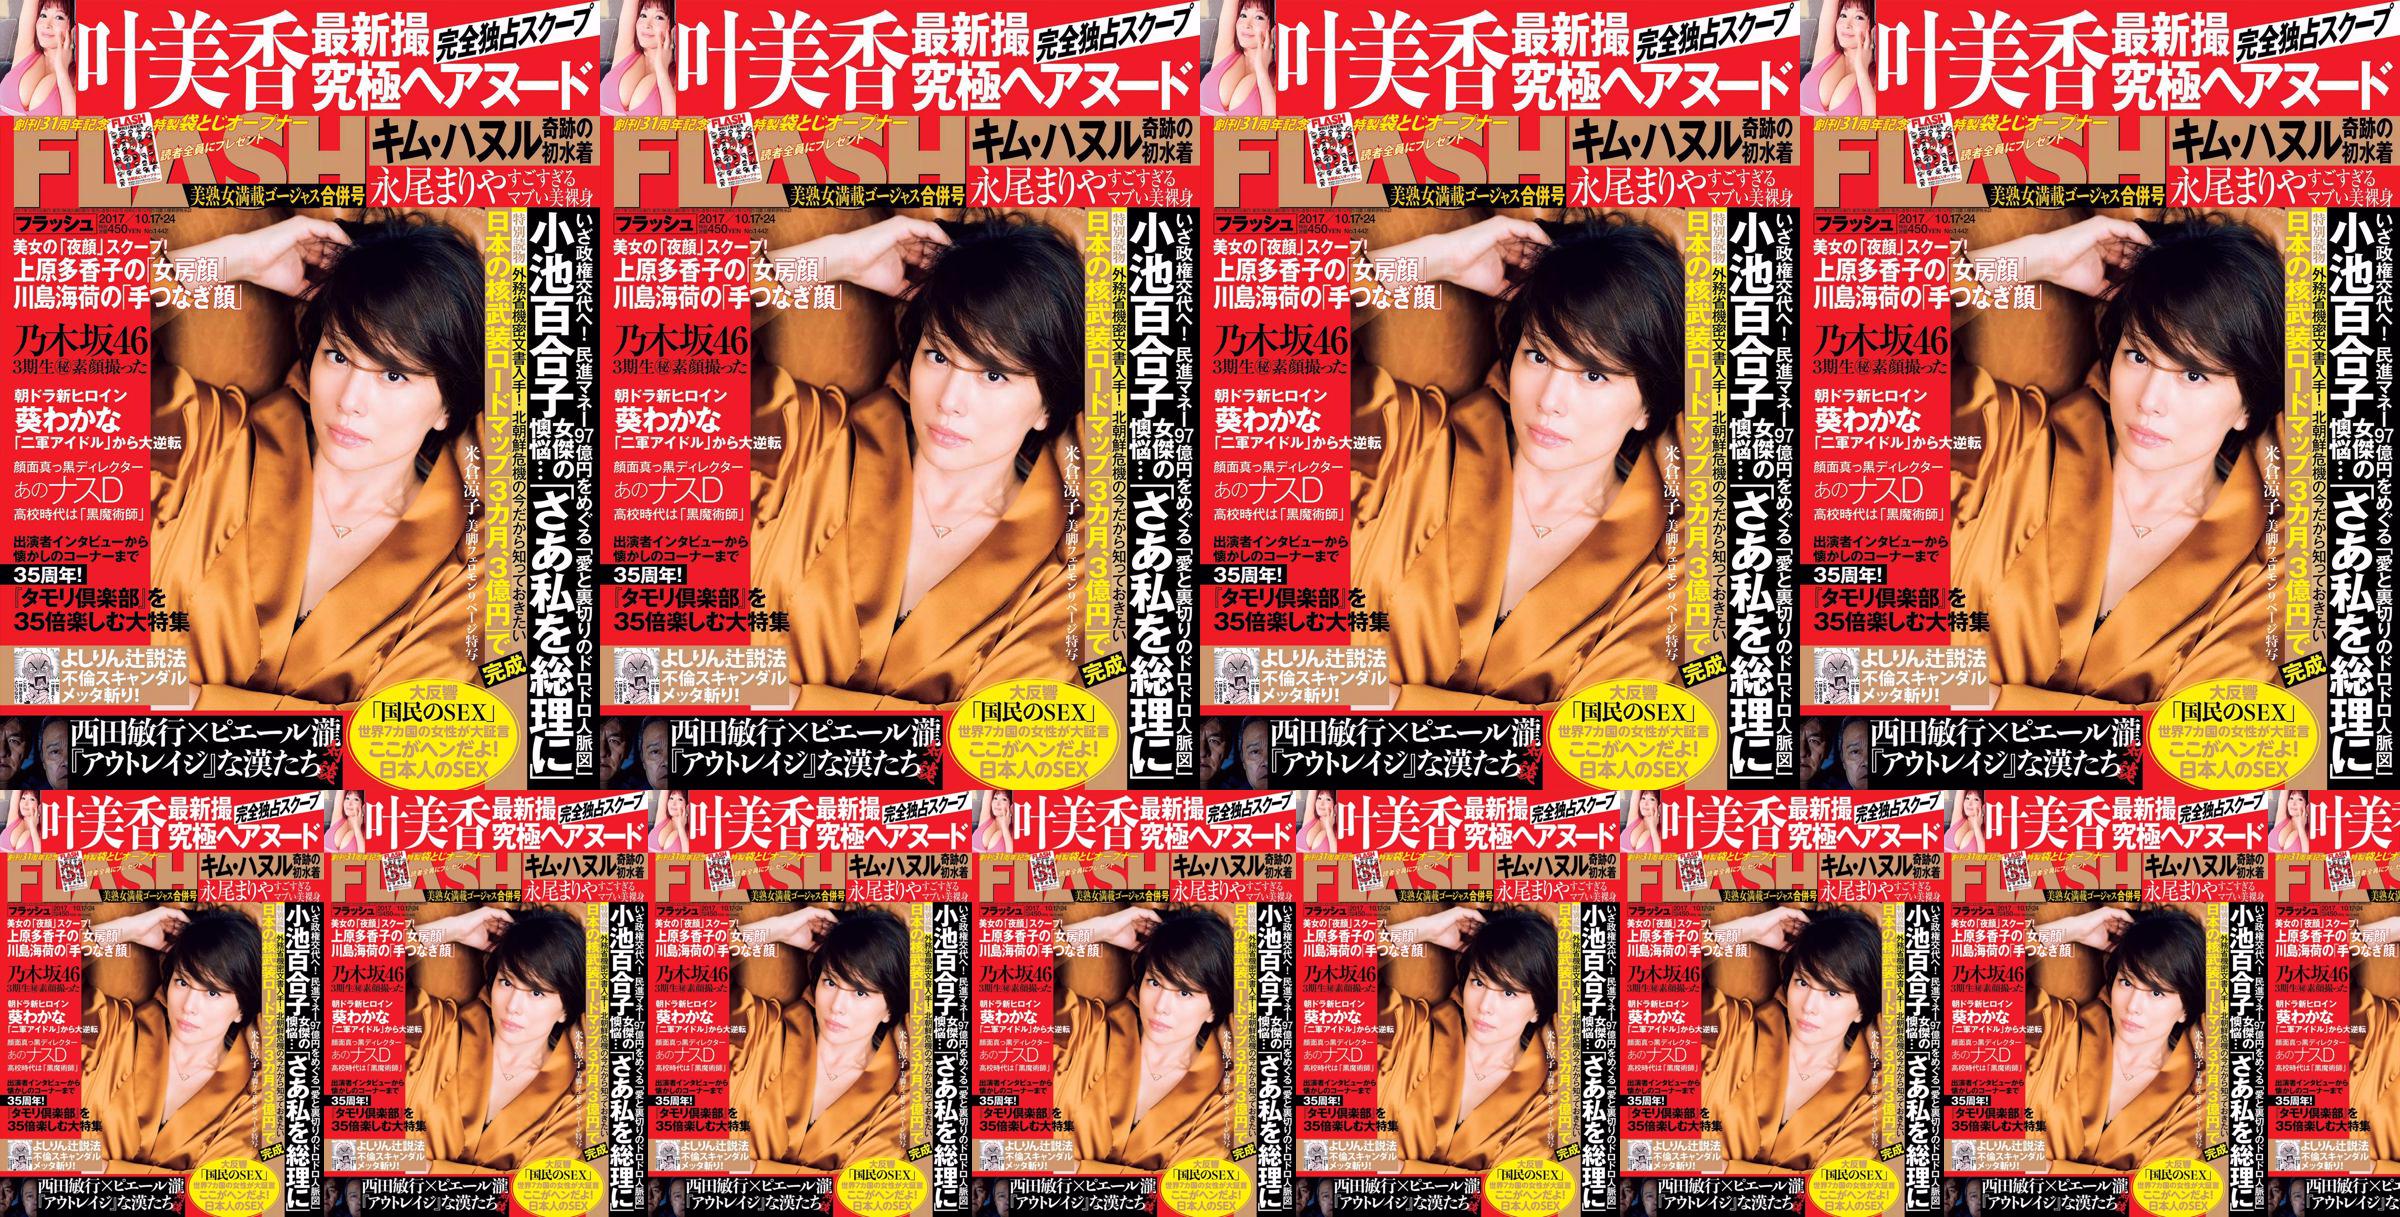 [FLASH] Yonekura Ryoko Ye Meixiang Tachibana Hoa Rin Nagao Rika 2017. 10.17-24 Tạp chí ảnh No.098af9 Trang 1